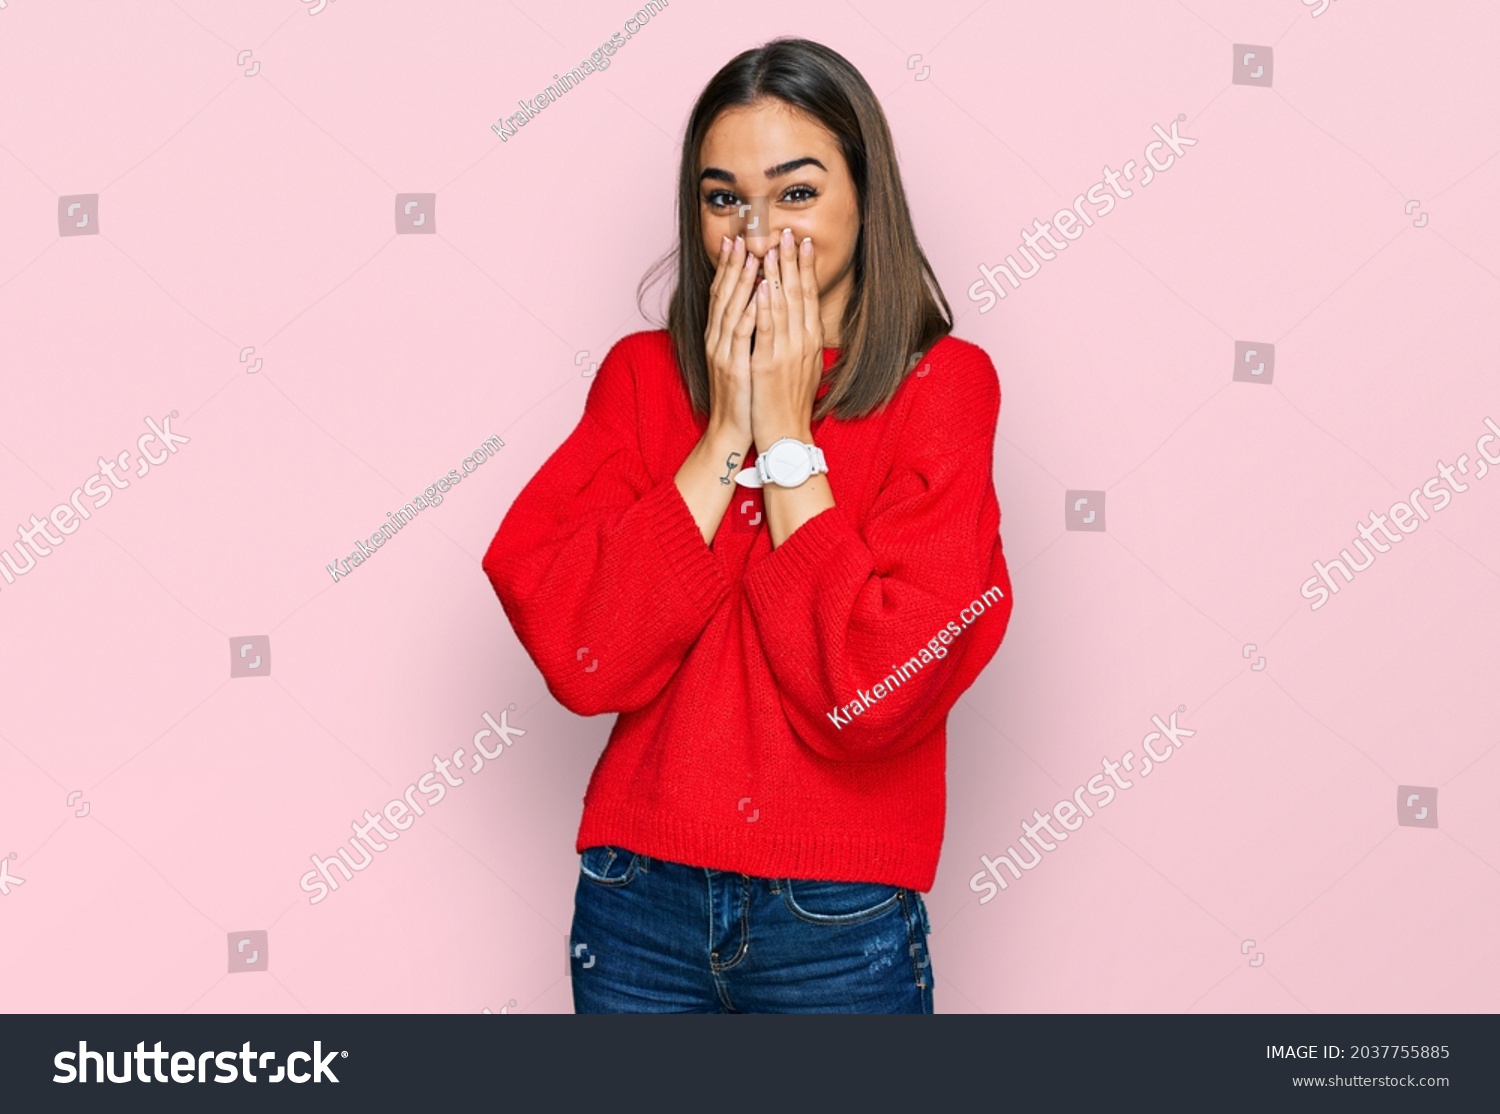 Embarrassed Female